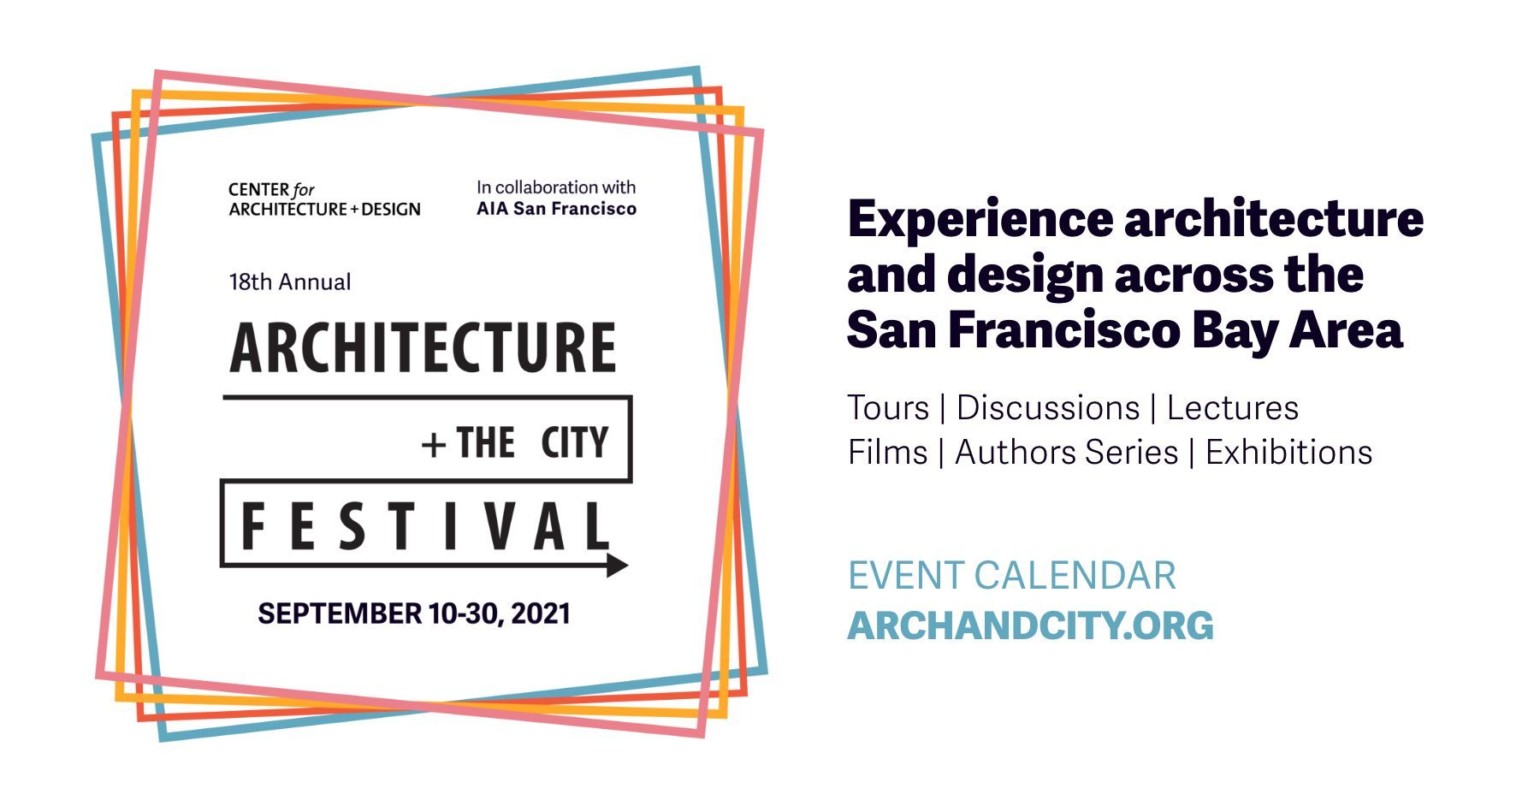 Center for Architecture + Design in collaboration with AIA San Francisco, the 18th Annual Architecture + the City Festival